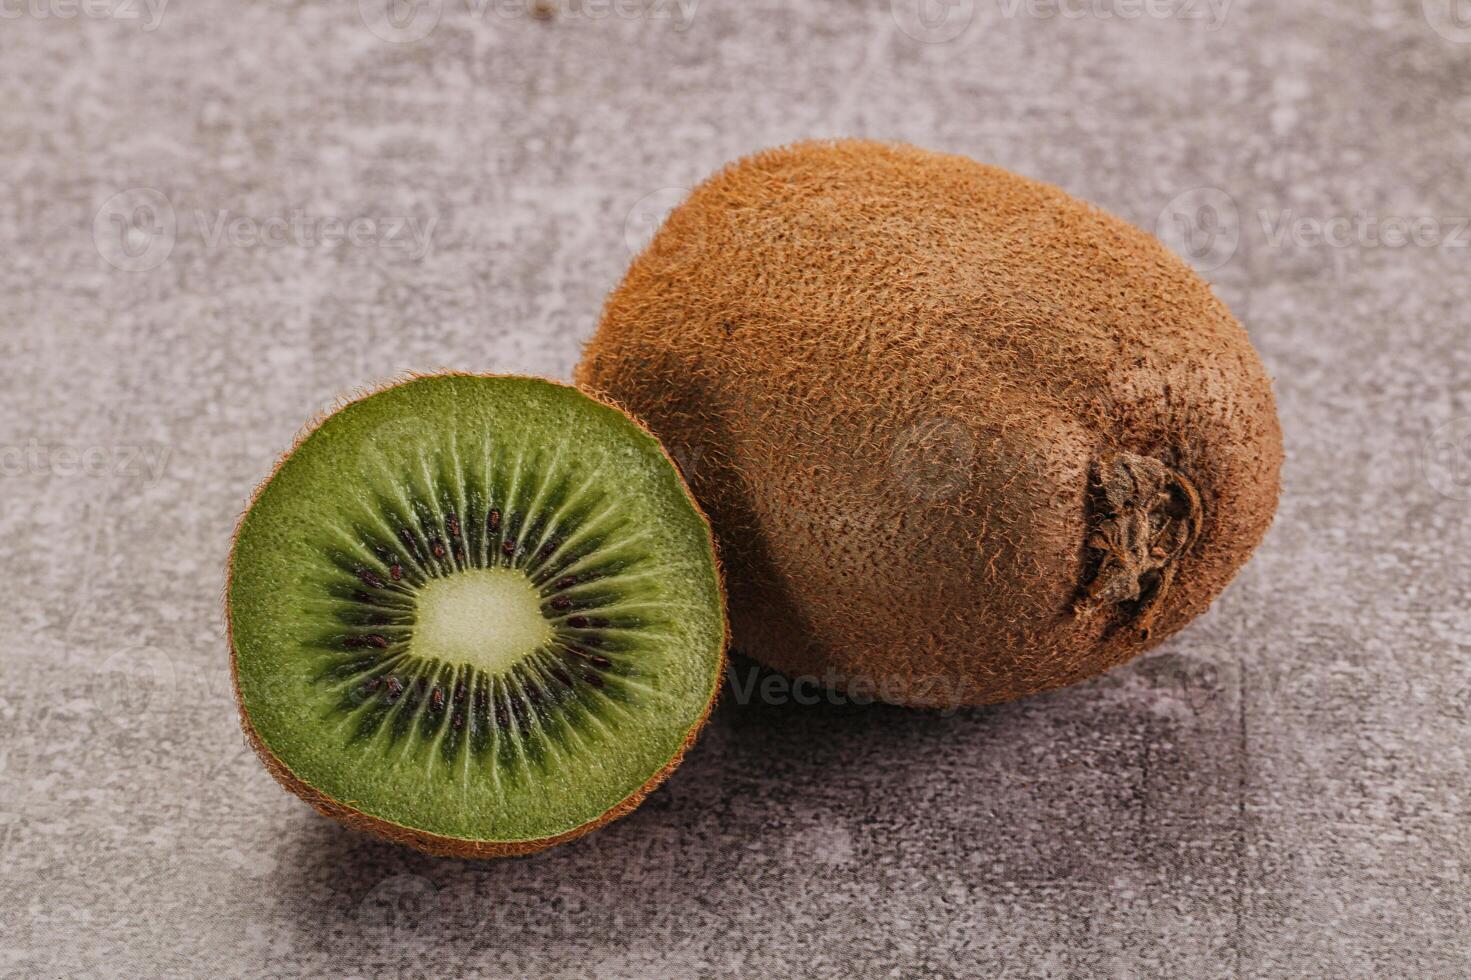 Süss und saftig Kiwi Obst foto